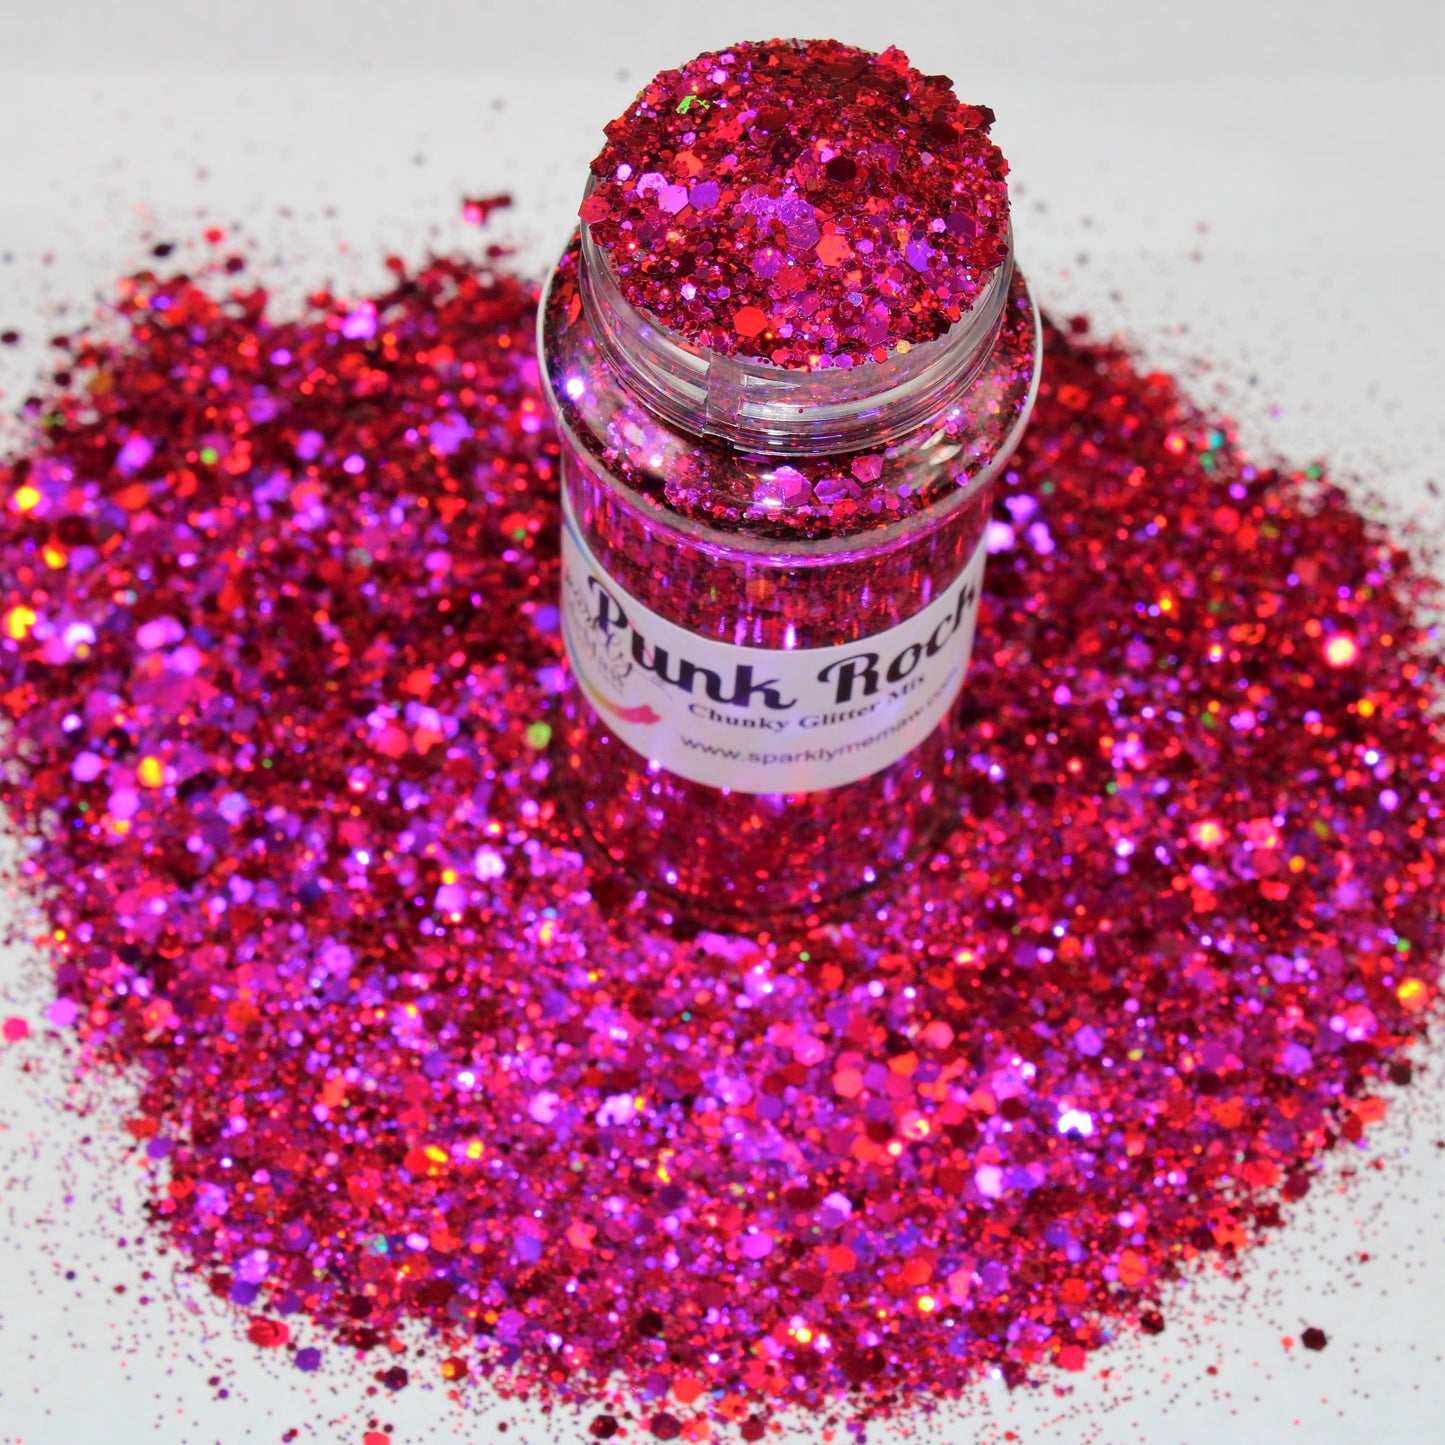 Punk Rock  Super Sparkle Color Shifting Chunky glitter Mix